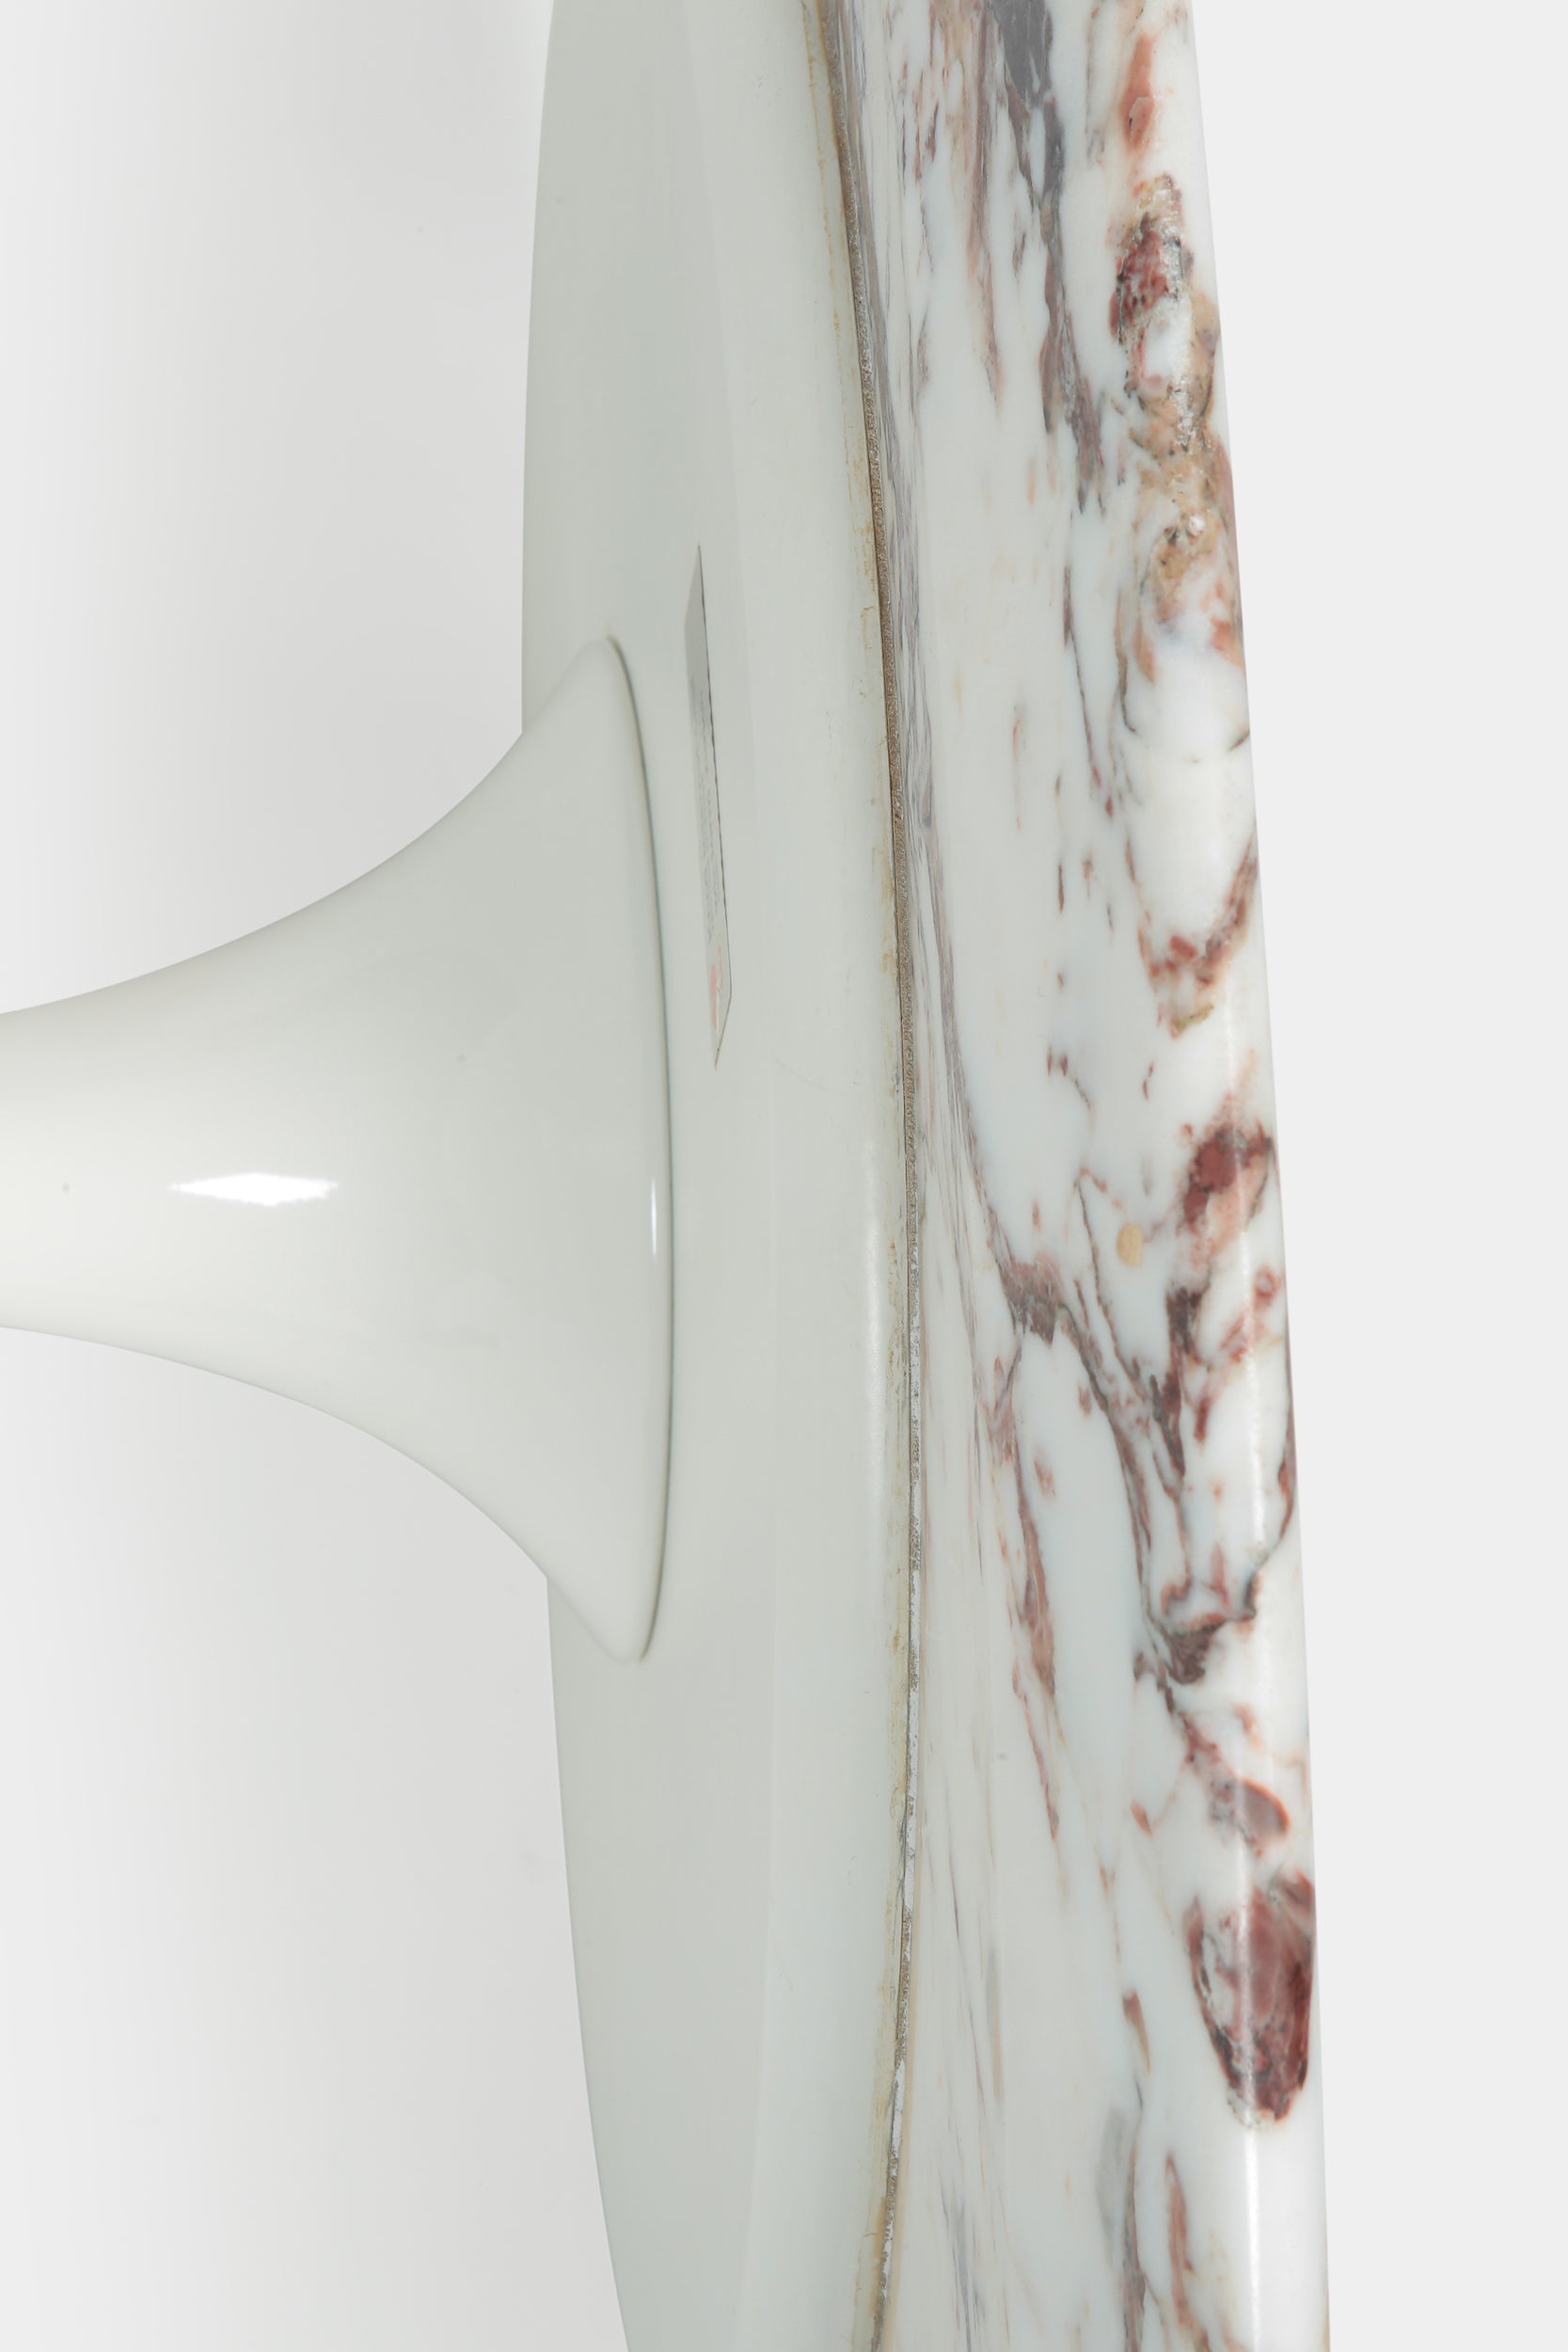 Eero Saarinen Side Table Marble 70s